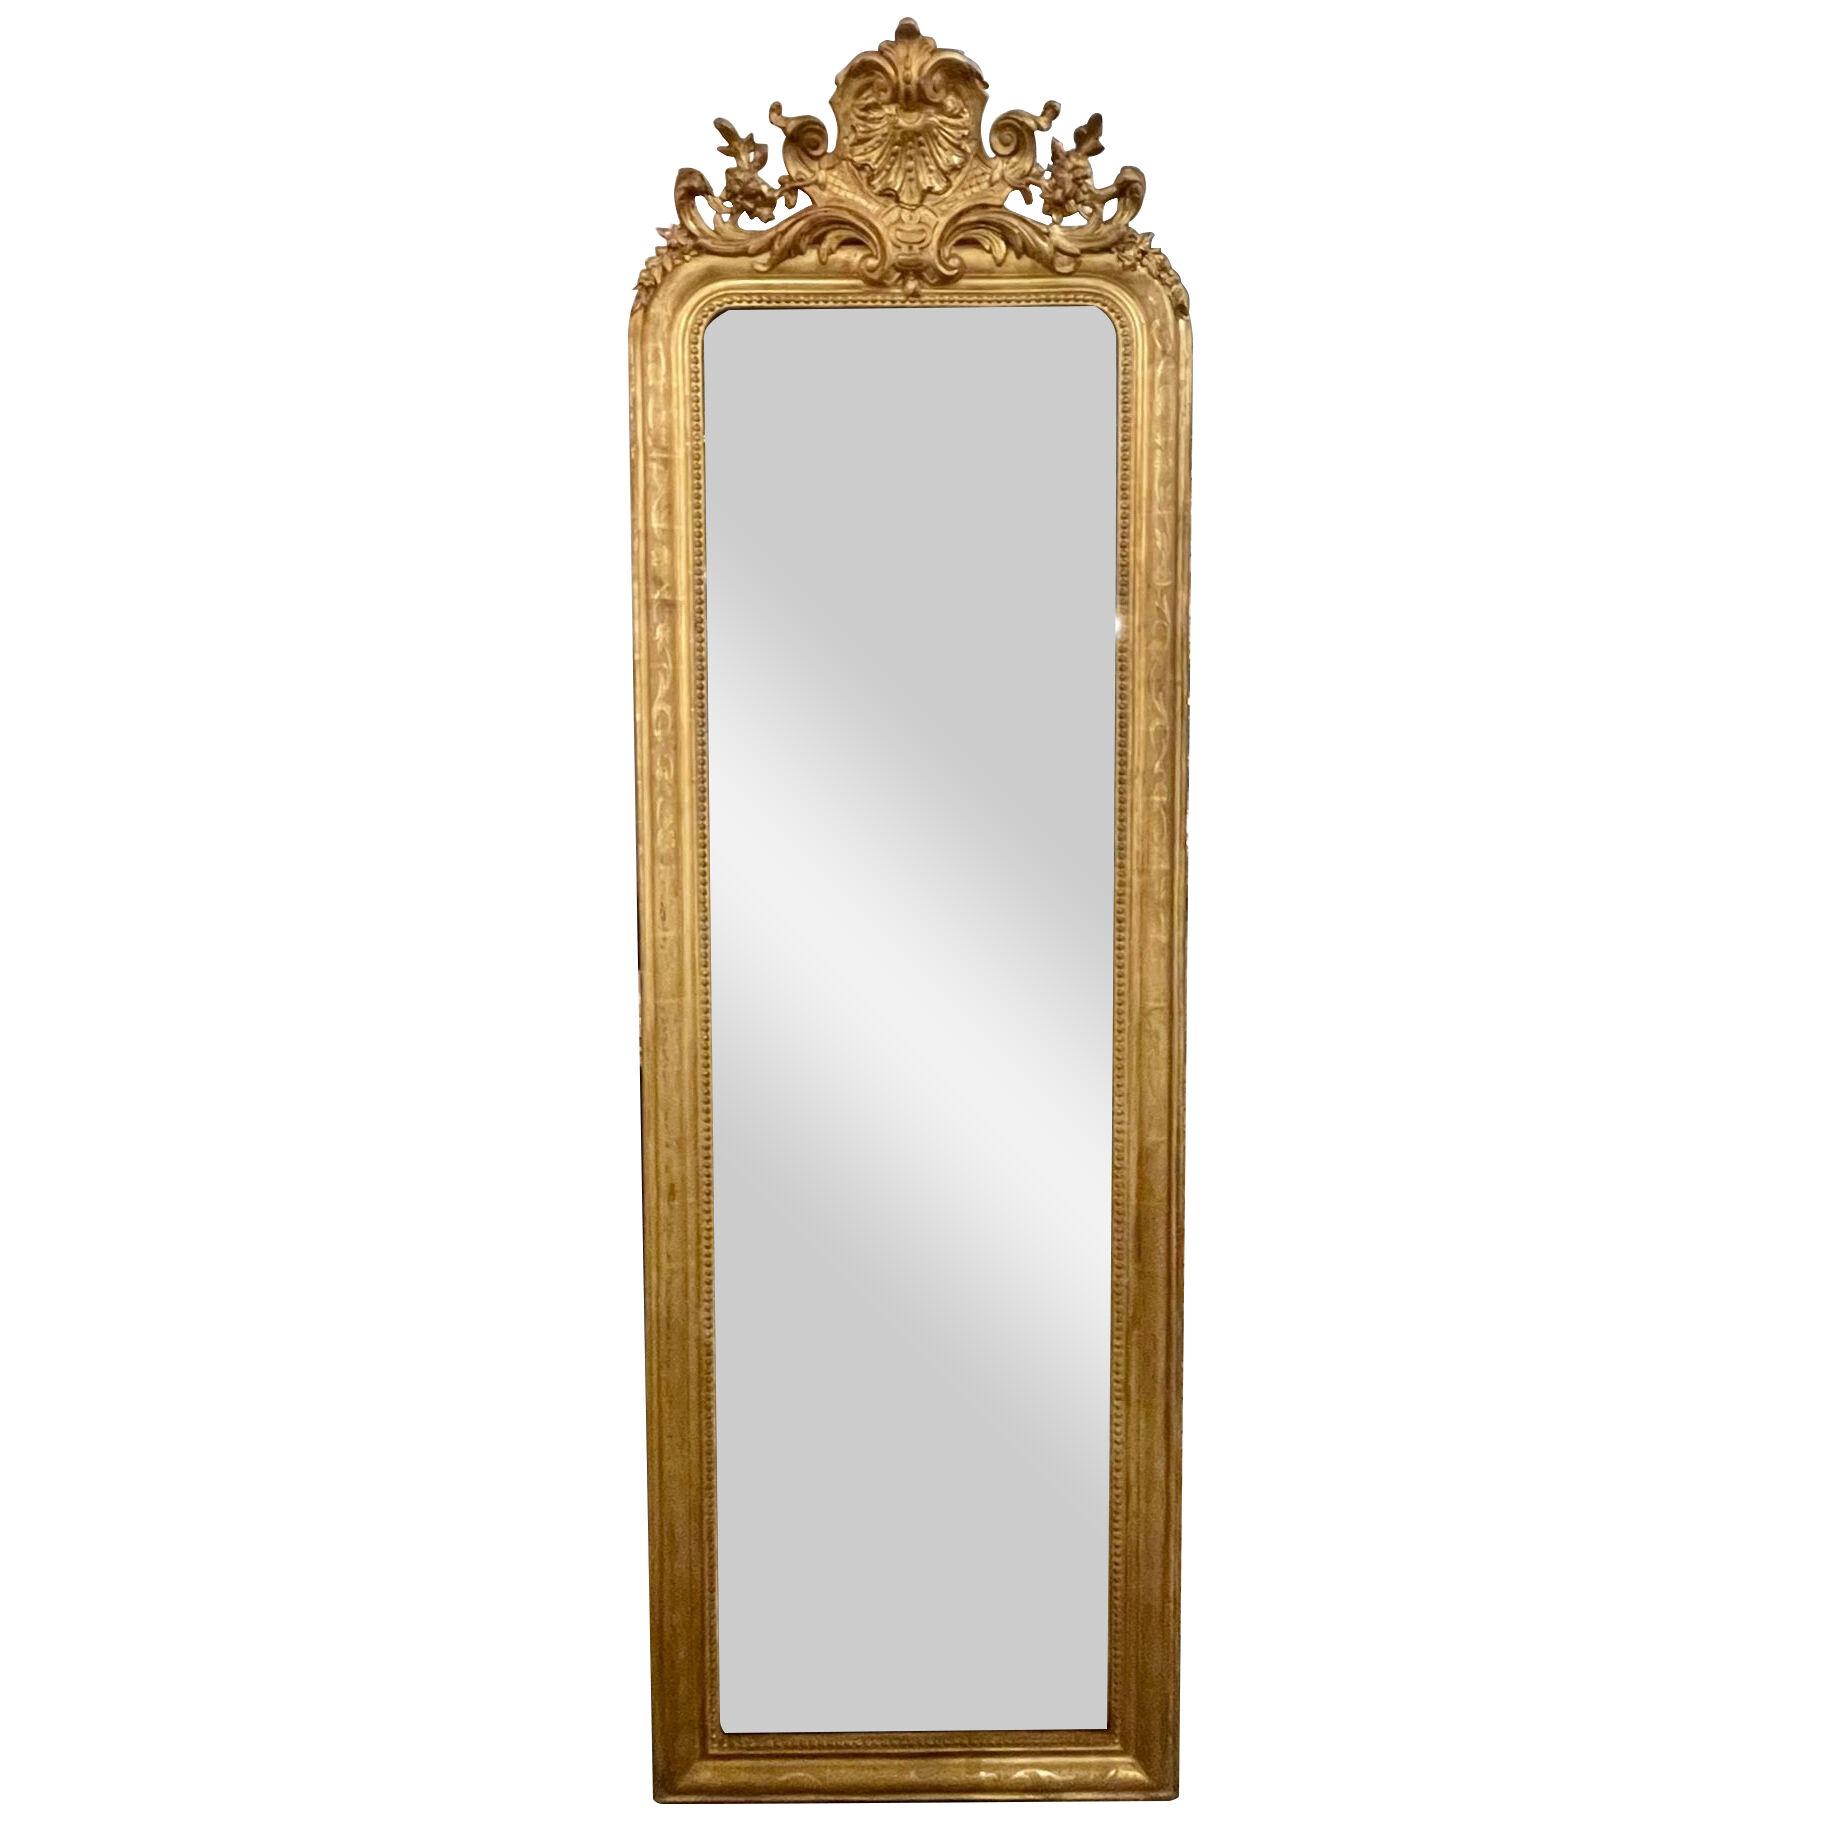 19th Century French Louis Philippe Narrow Mirror